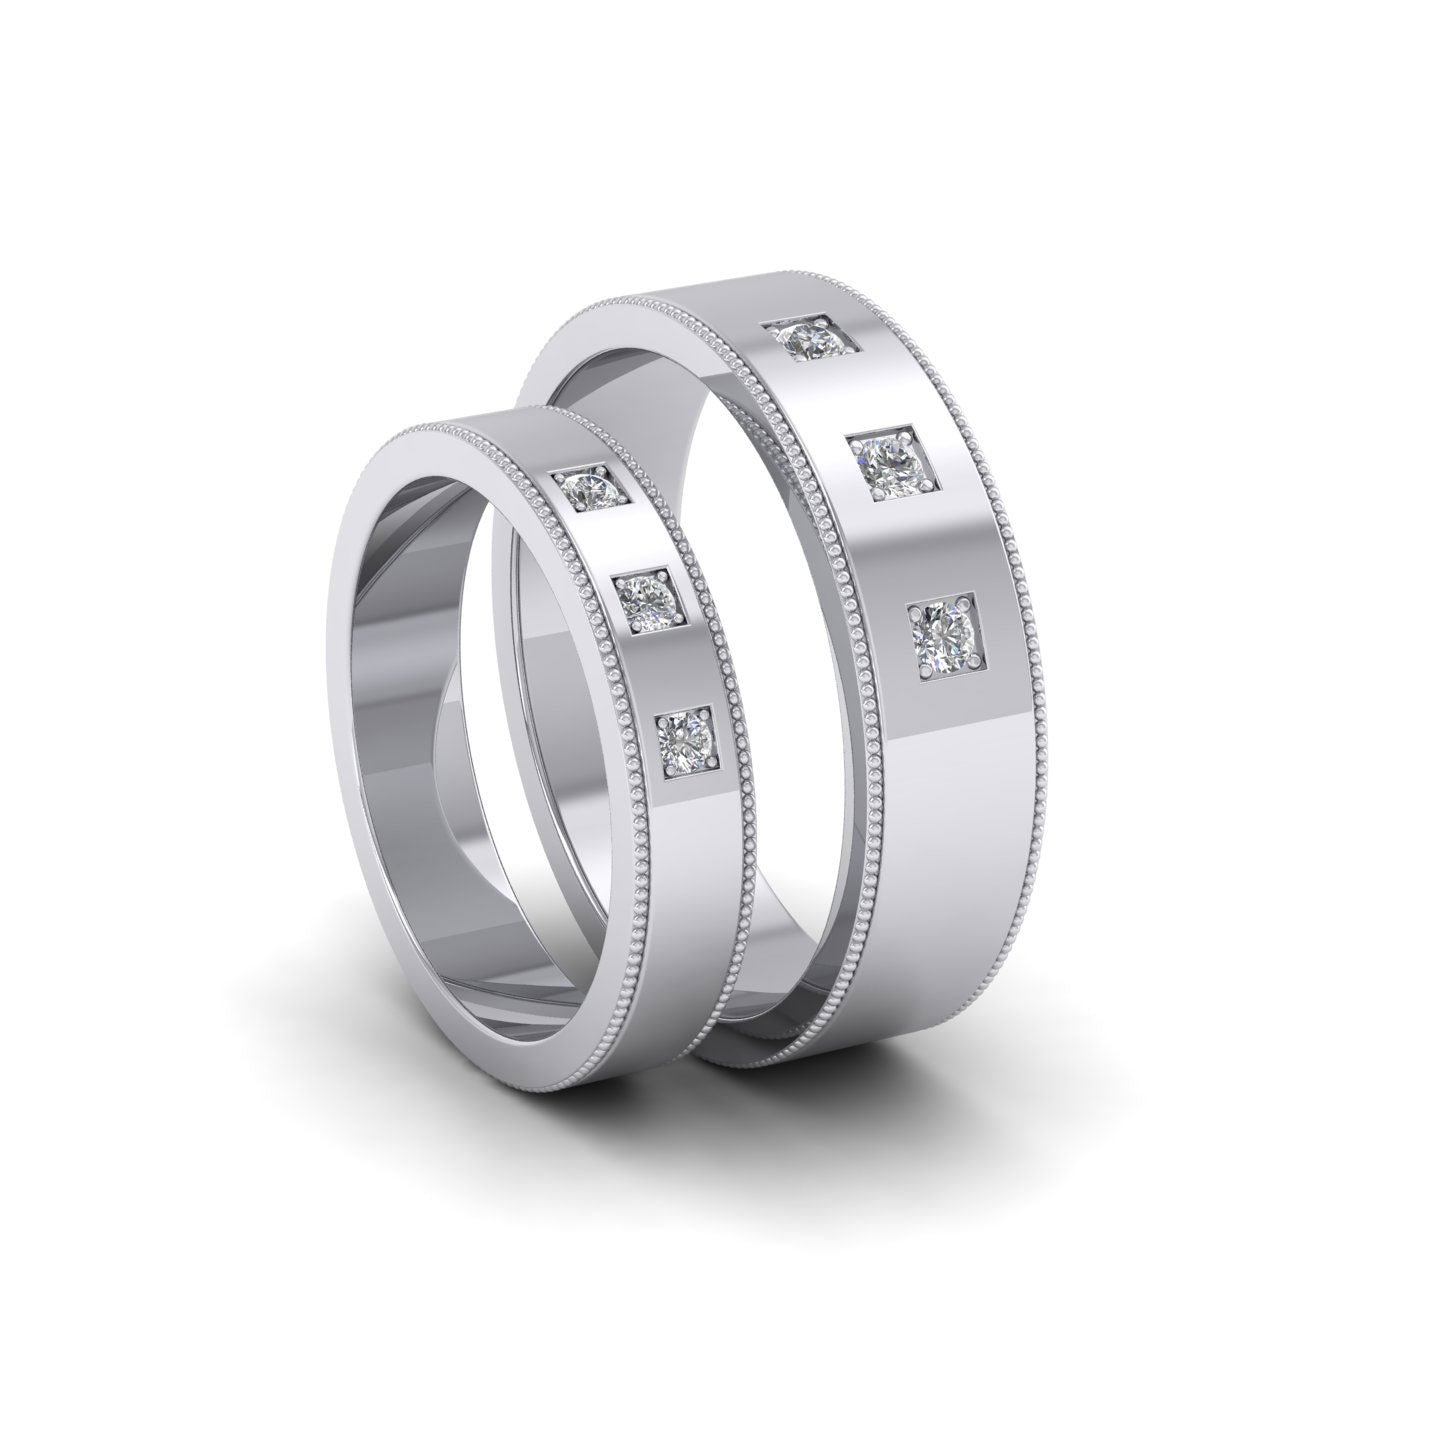 Three Diamonds With Square Setting 950 Palladium 4mm Wedding Ring With Millgrain Edge